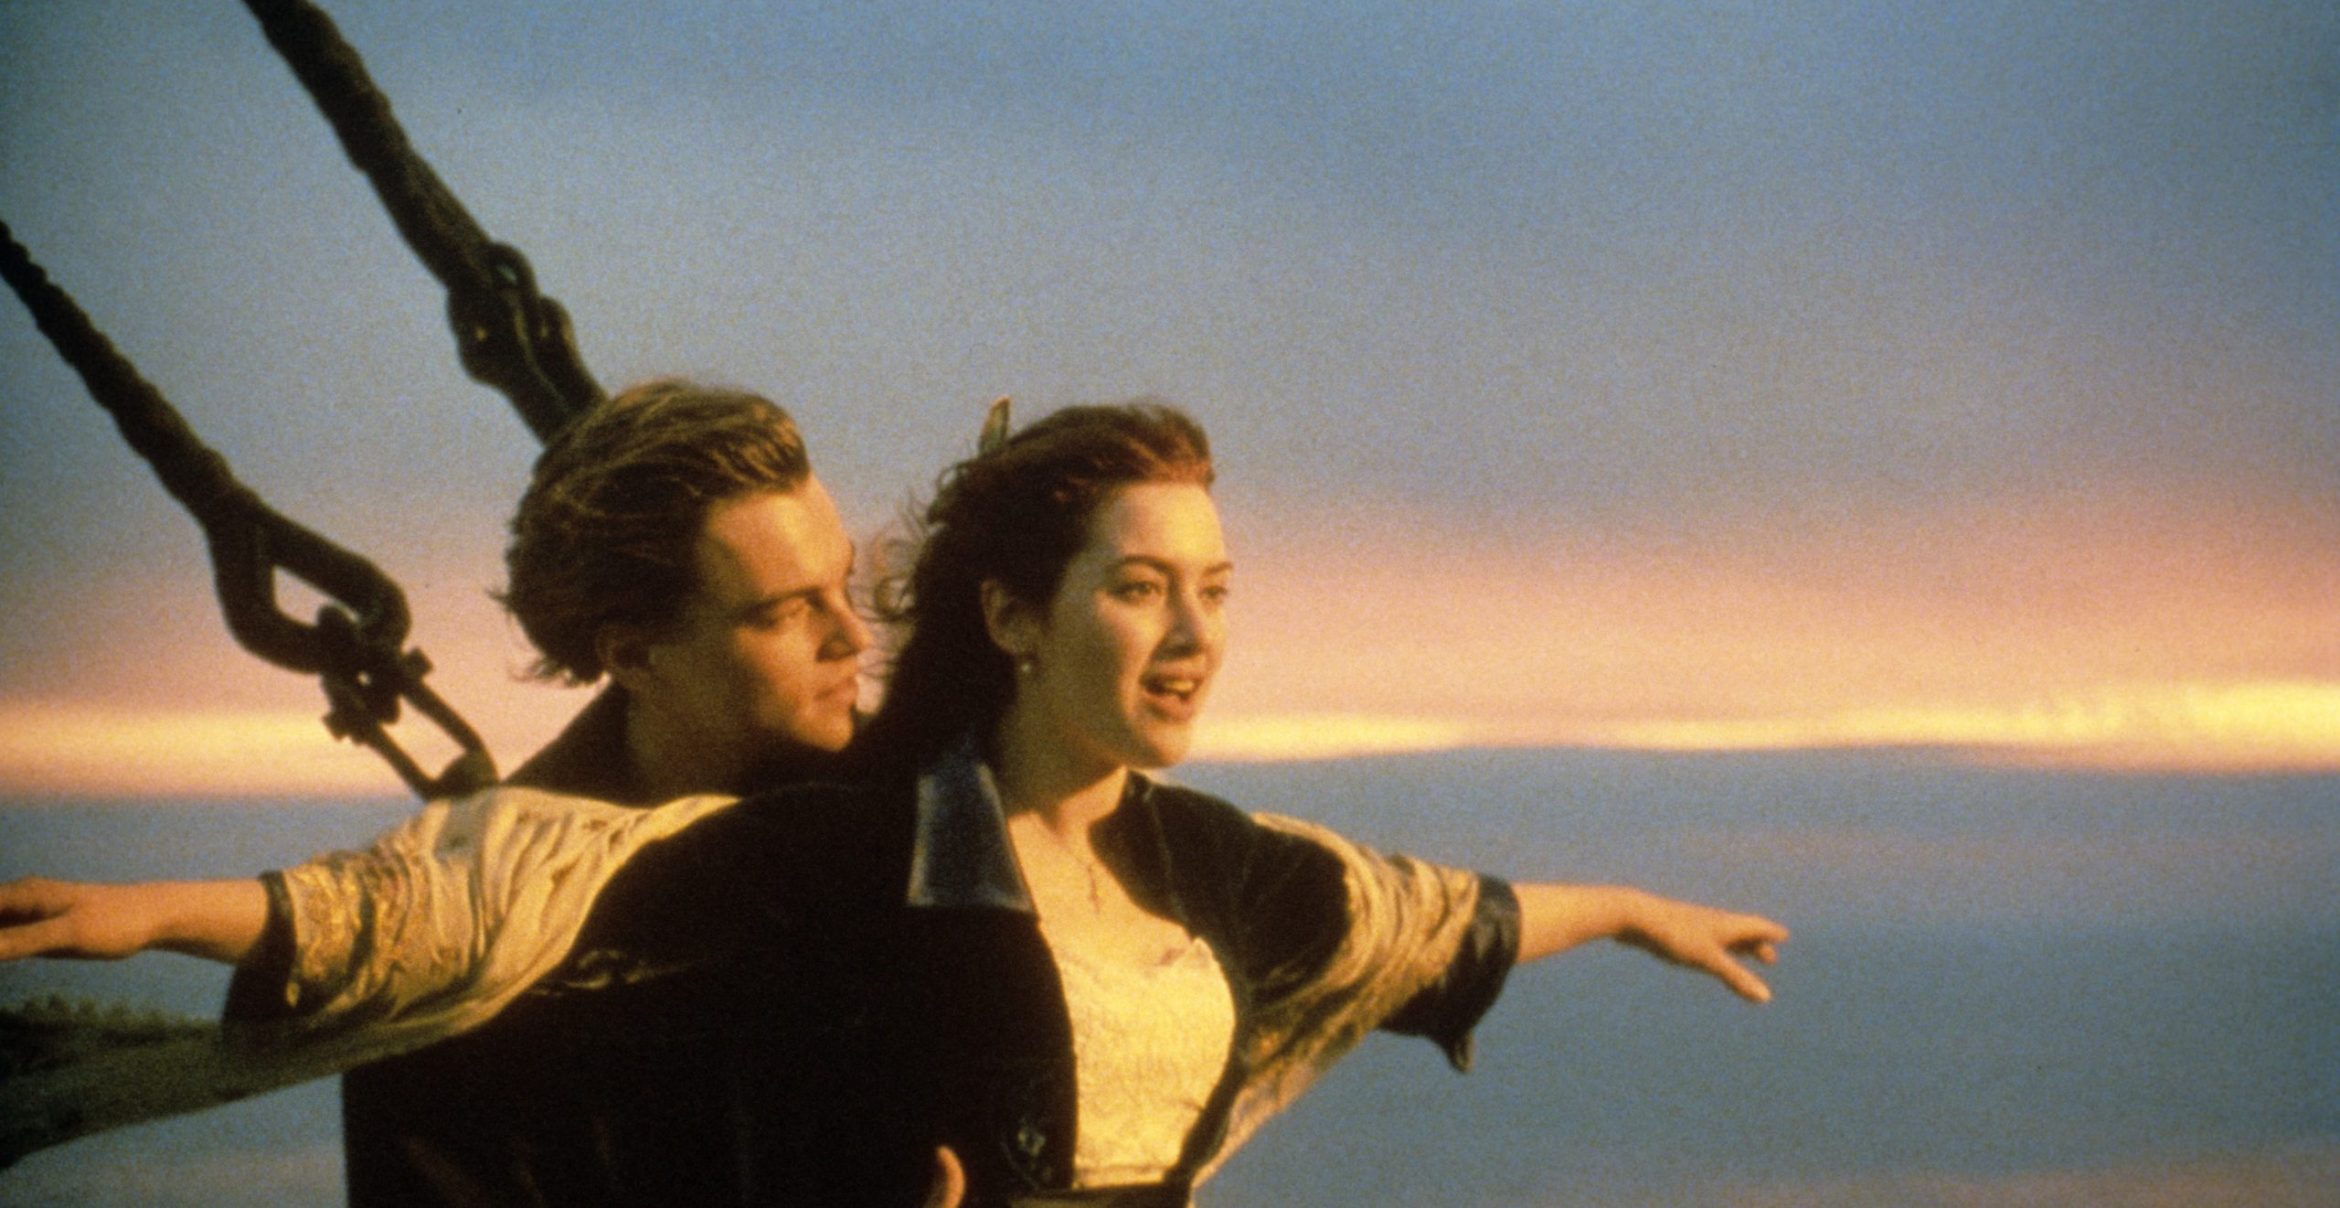 Musste Jack in „Titanic“ sterben? Studie gibt endgültig Antwort